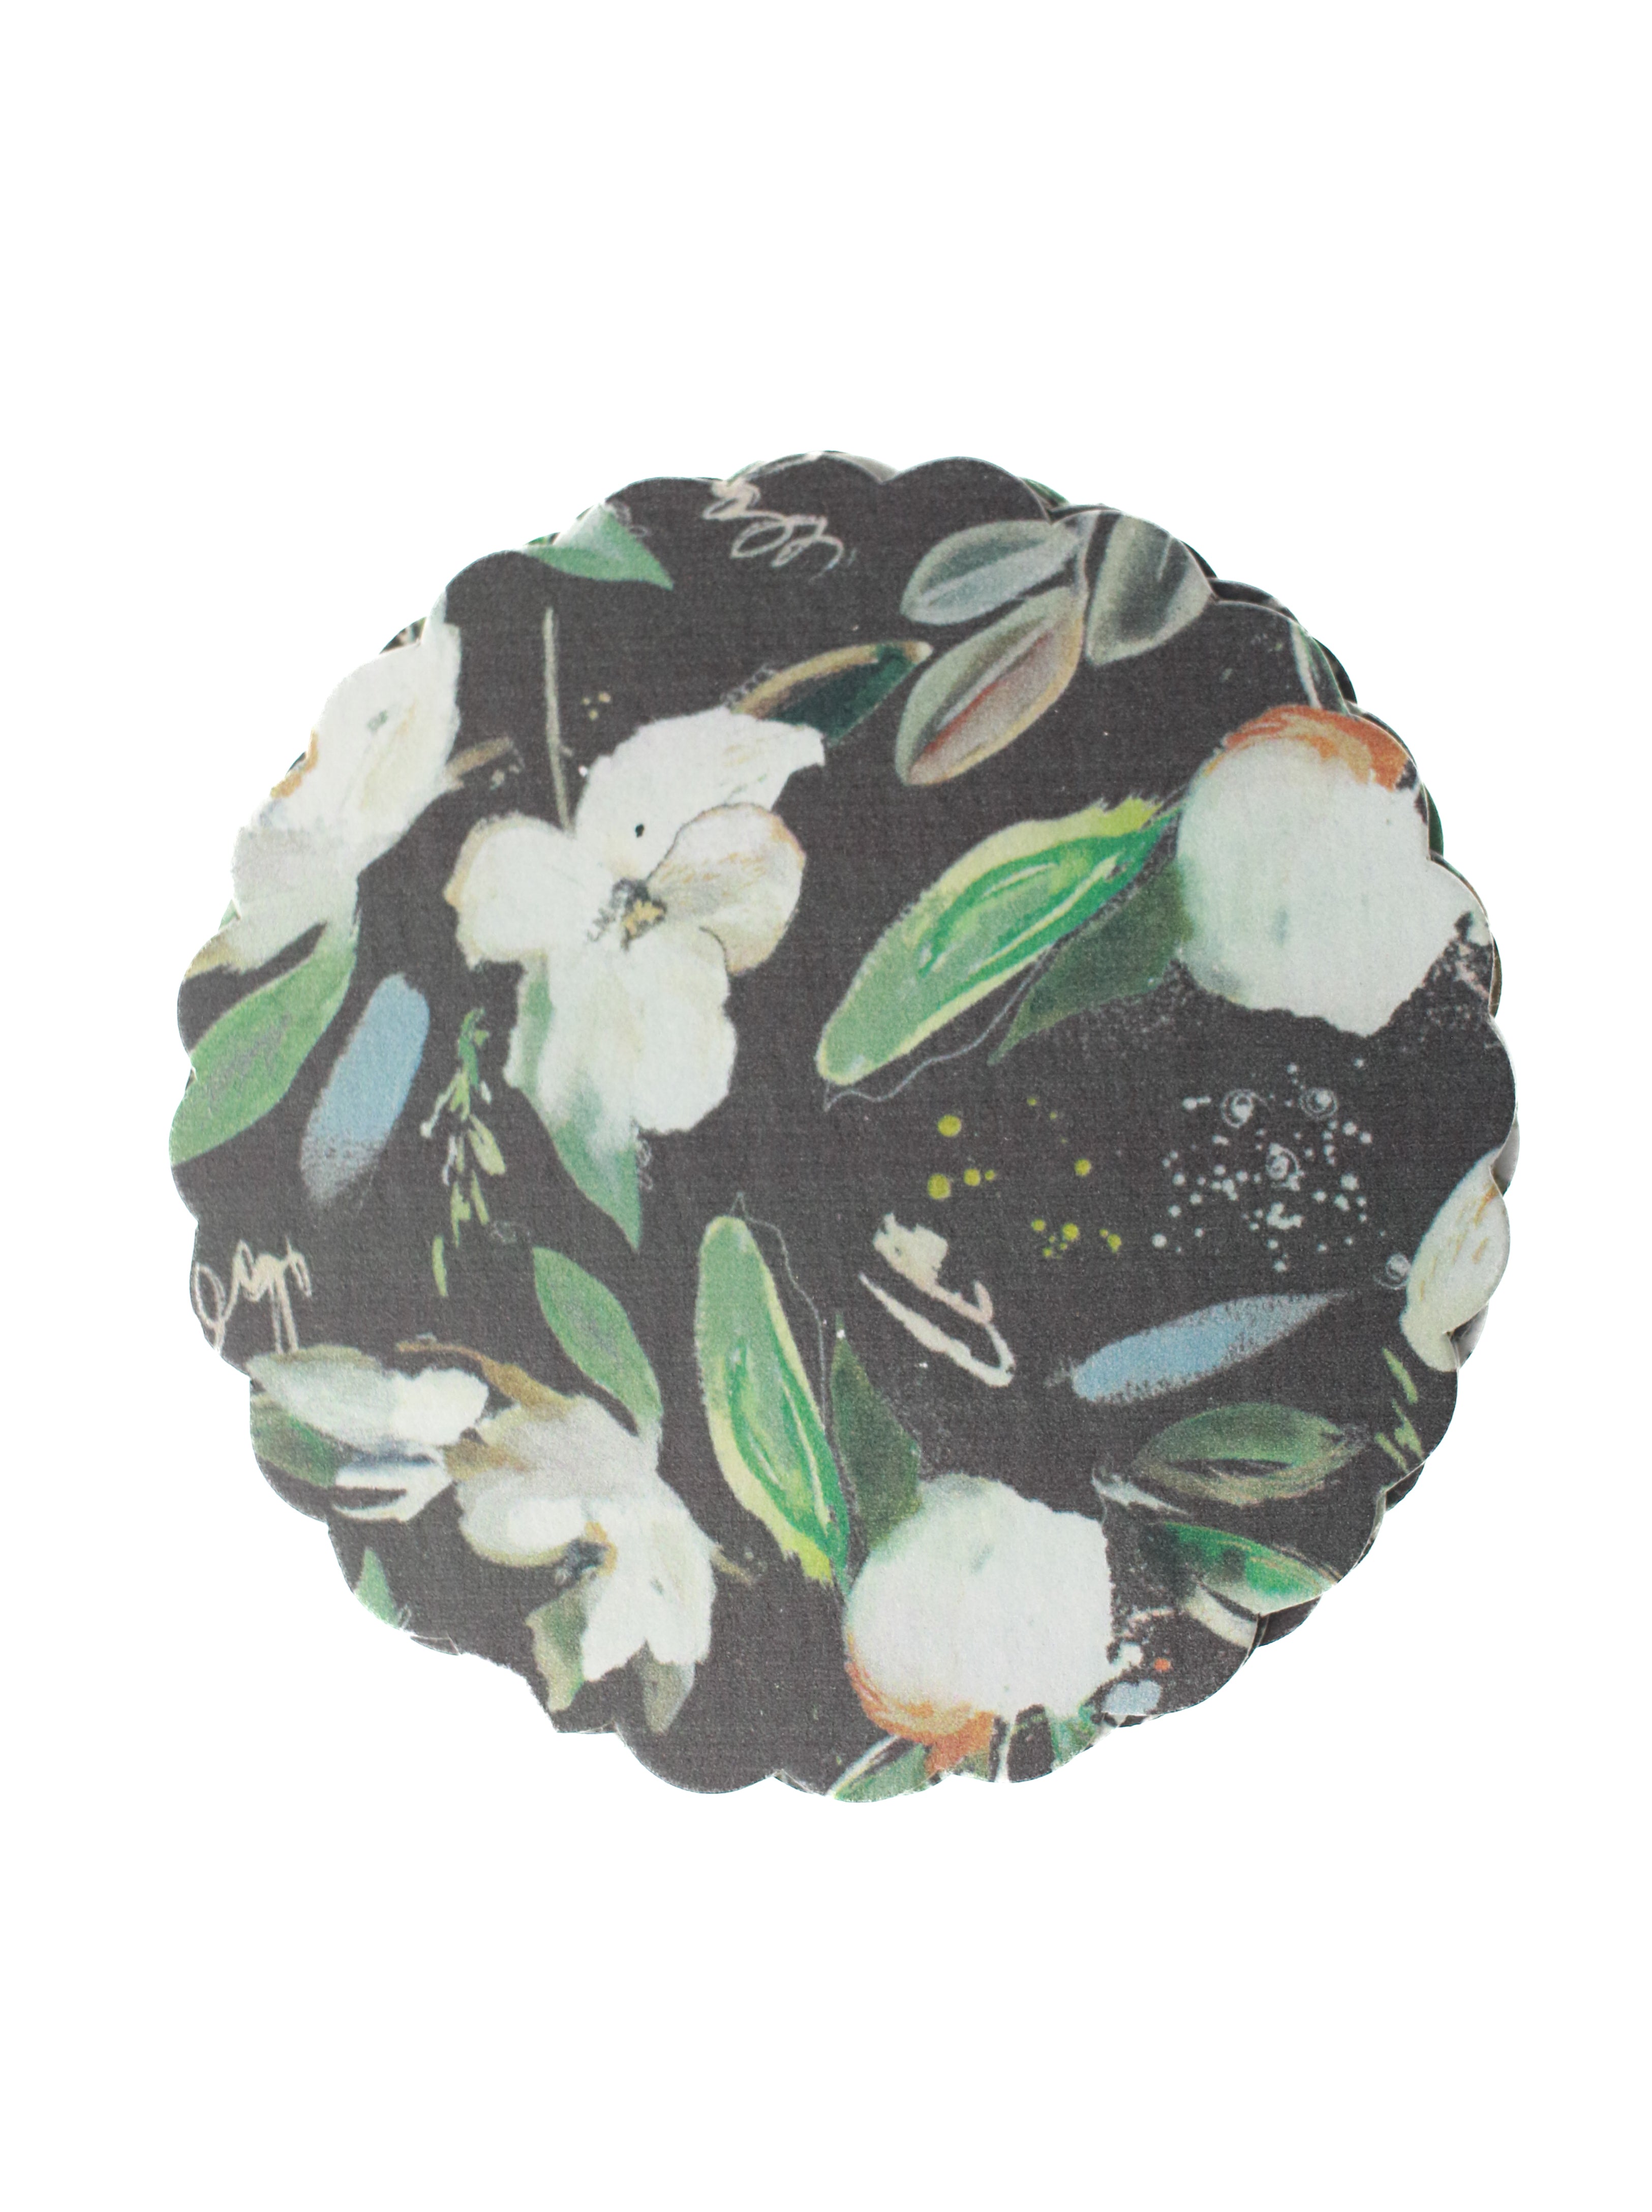 Magnolia Scalloped Paper Coaster | Set of 6